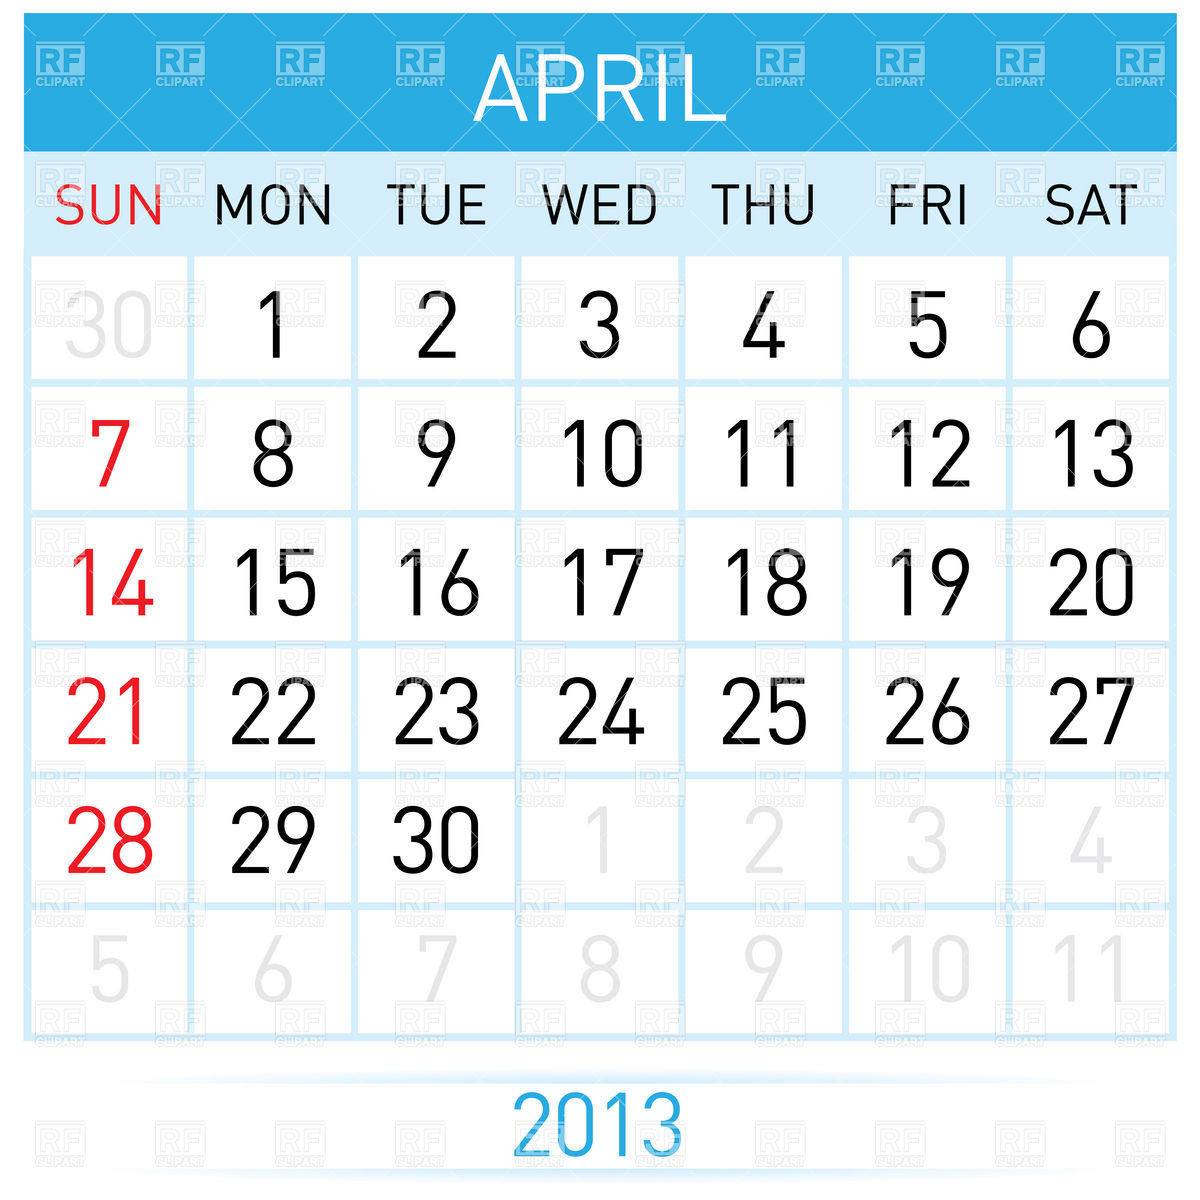 April 2013 Month Calendar 7028 Calendars Layouts Download Royalty